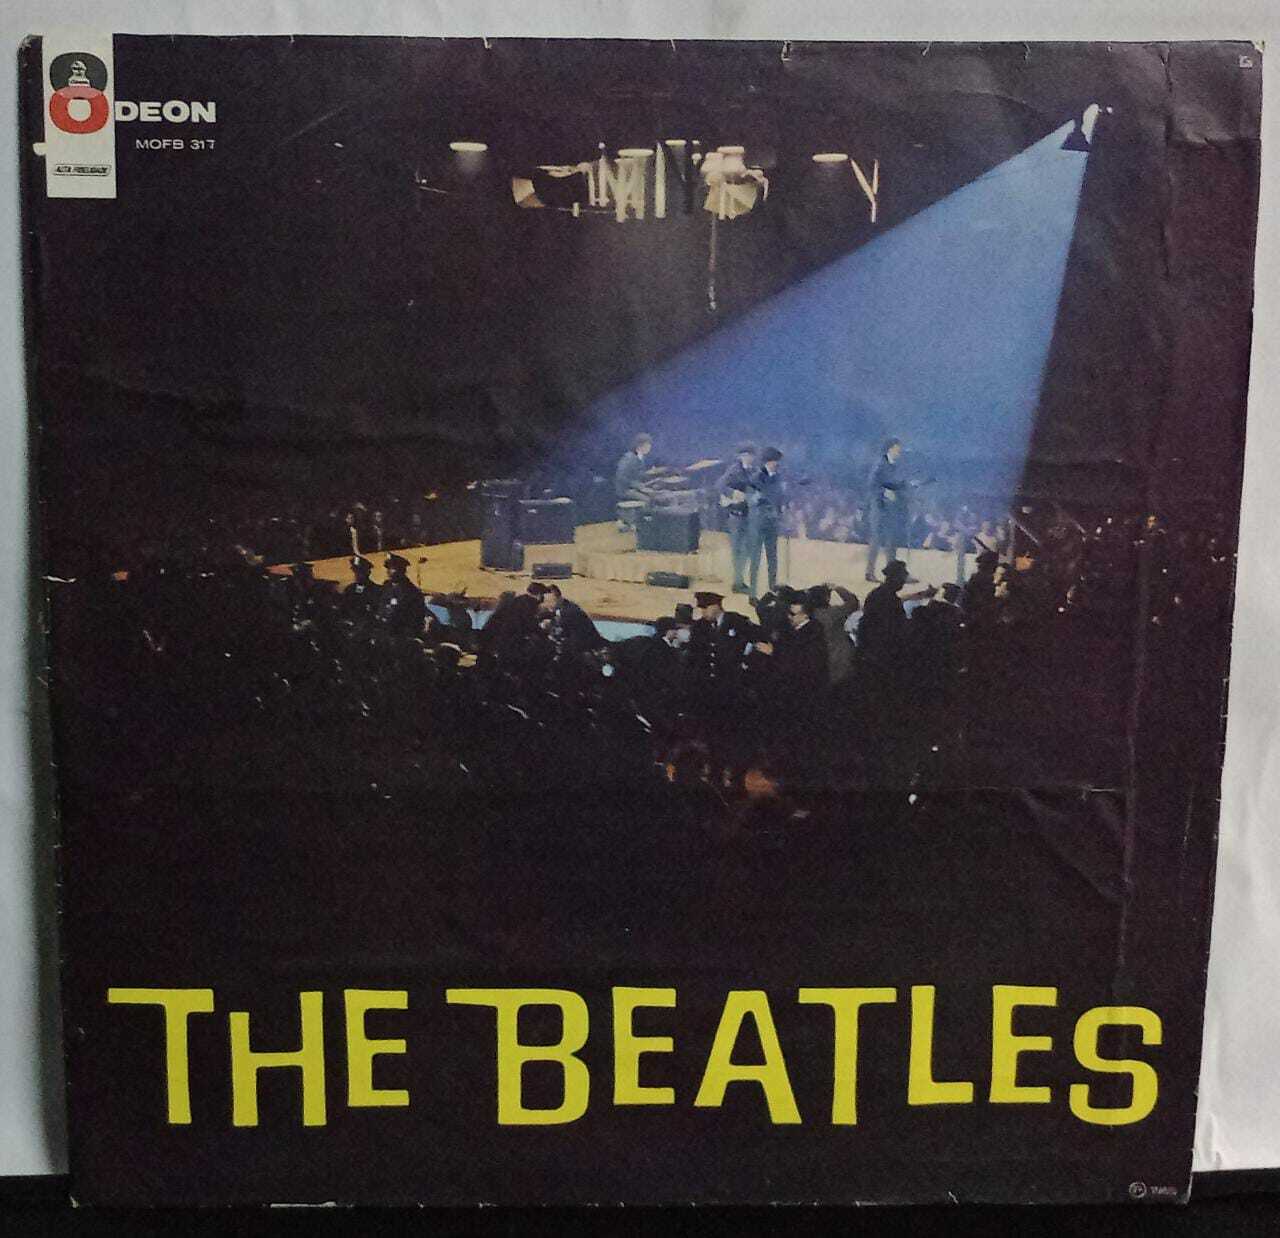 Vinil - Beatles the - 65 (mono)